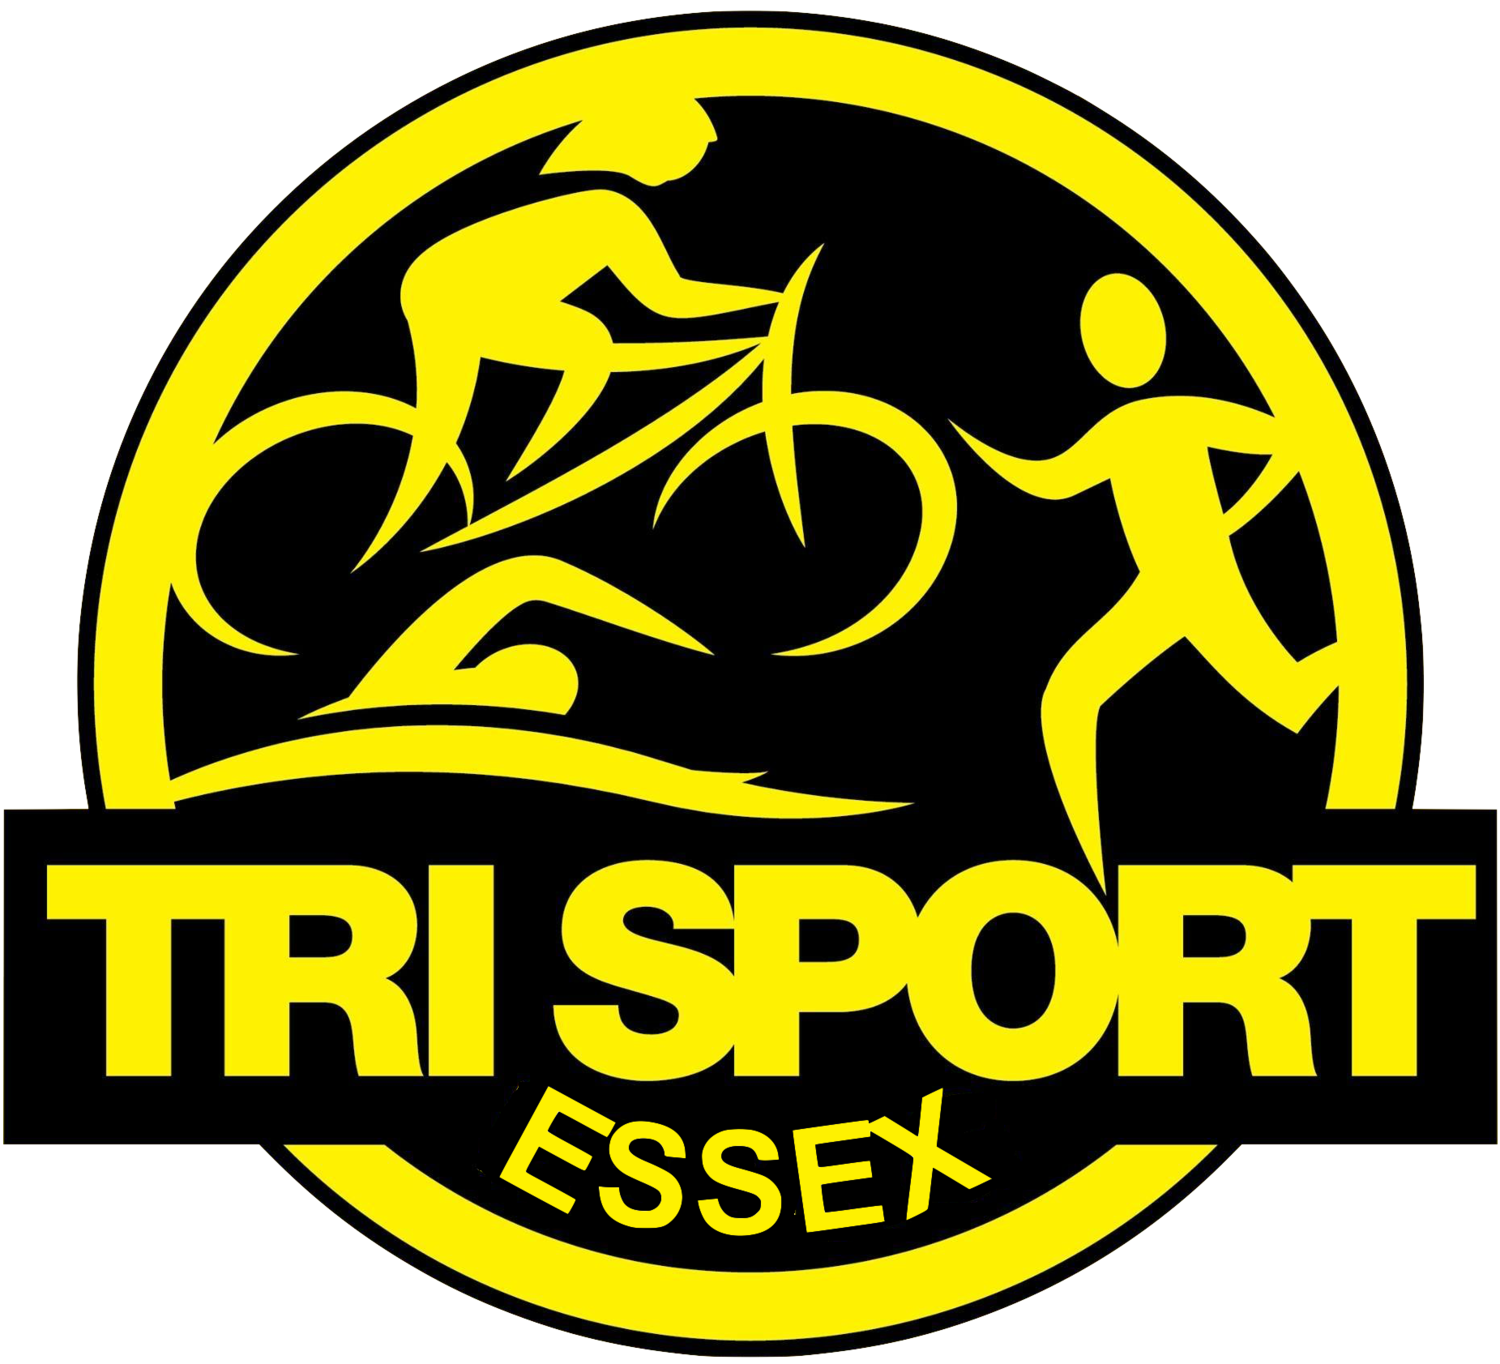 Tri Sport Essex (Brentwood)